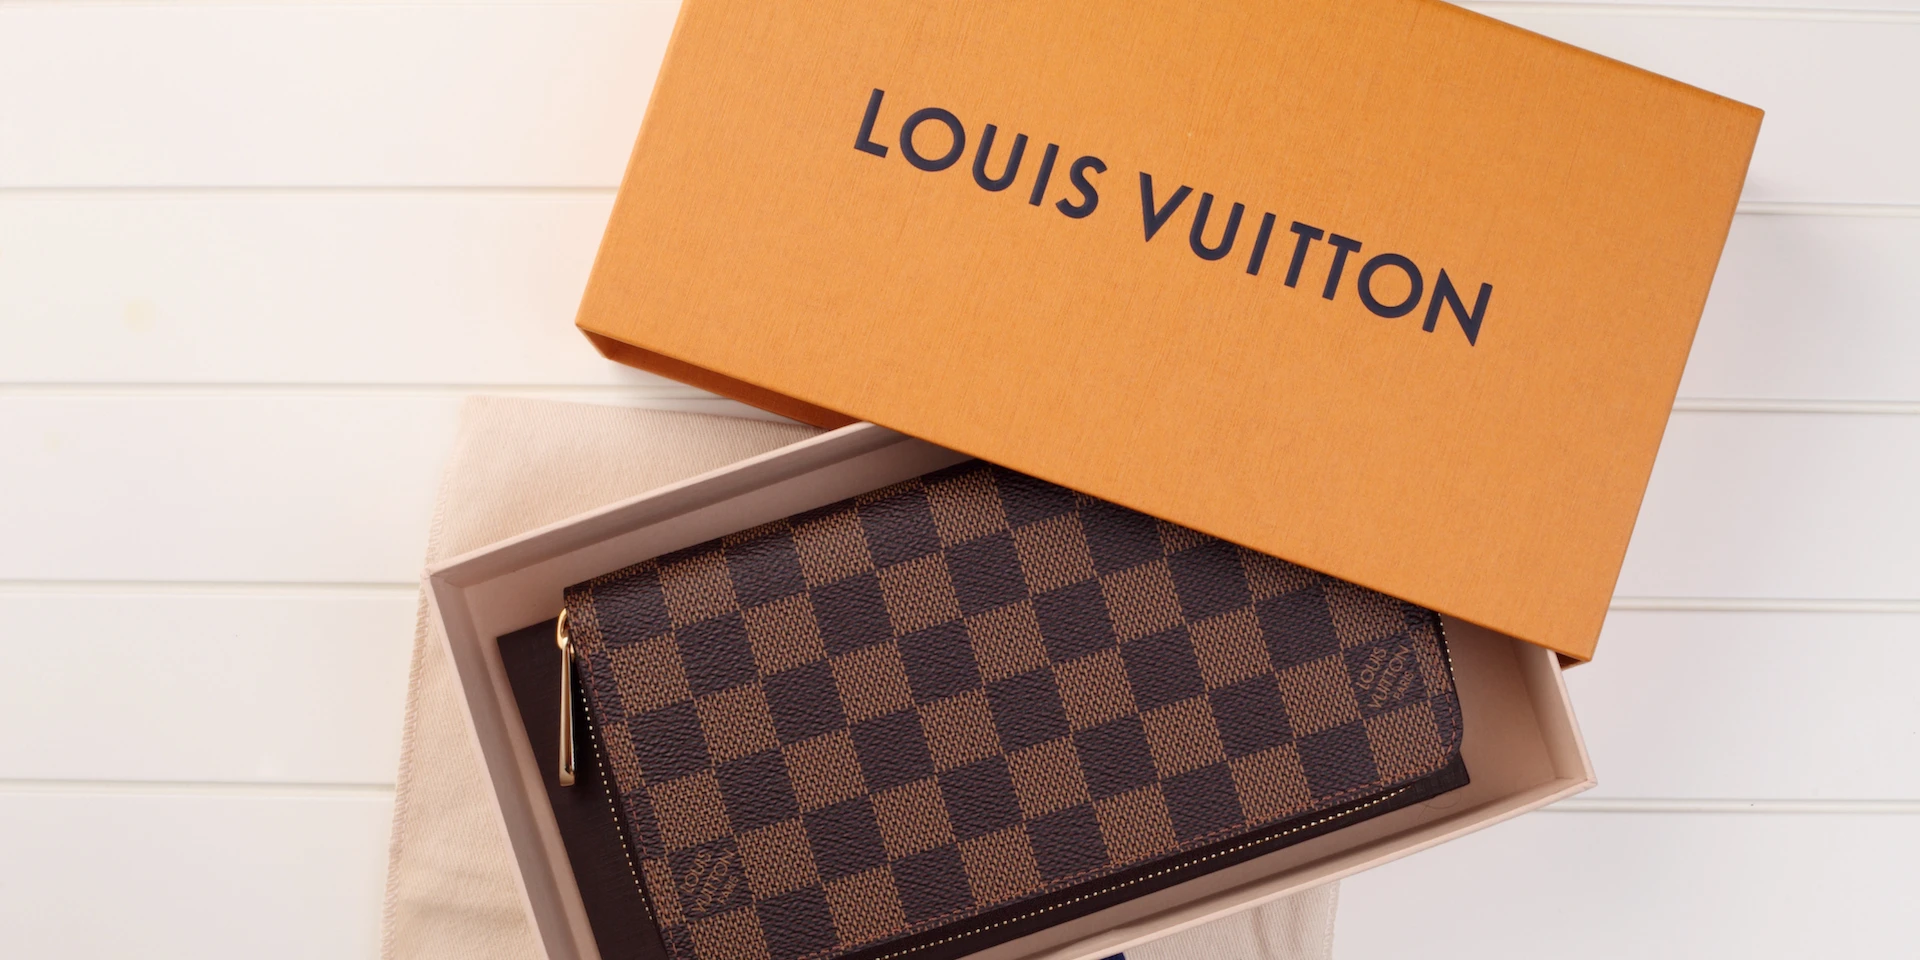 Lookalike Logos:  Louis Vuitton loses trademark battle against Zadig & Voltaire